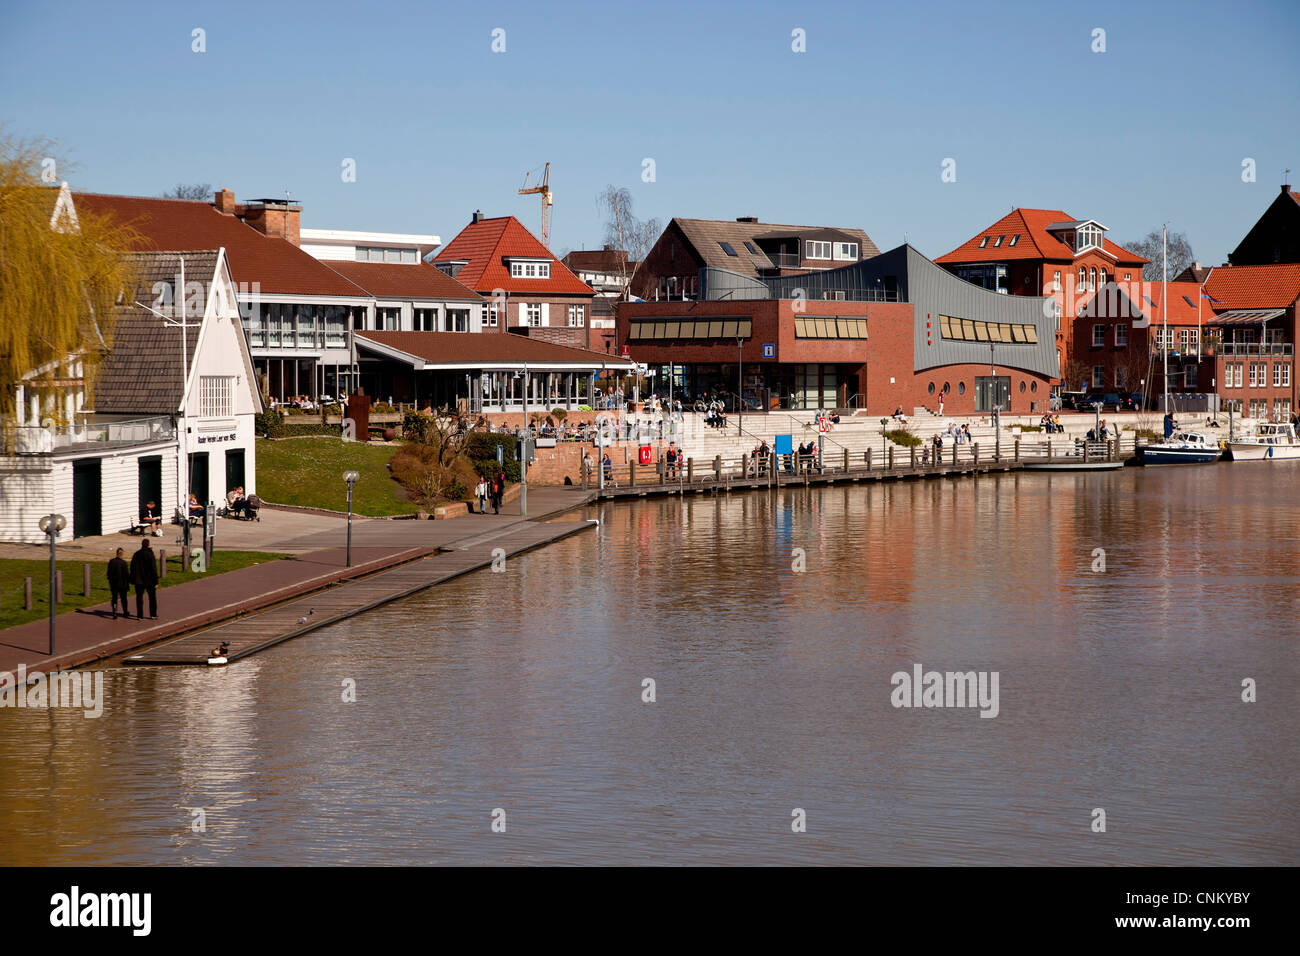 Ludwig-Klopp-Promenade al porto di Leer, Frisia orientale, Bassa Sassonia, Germania Foto Stock